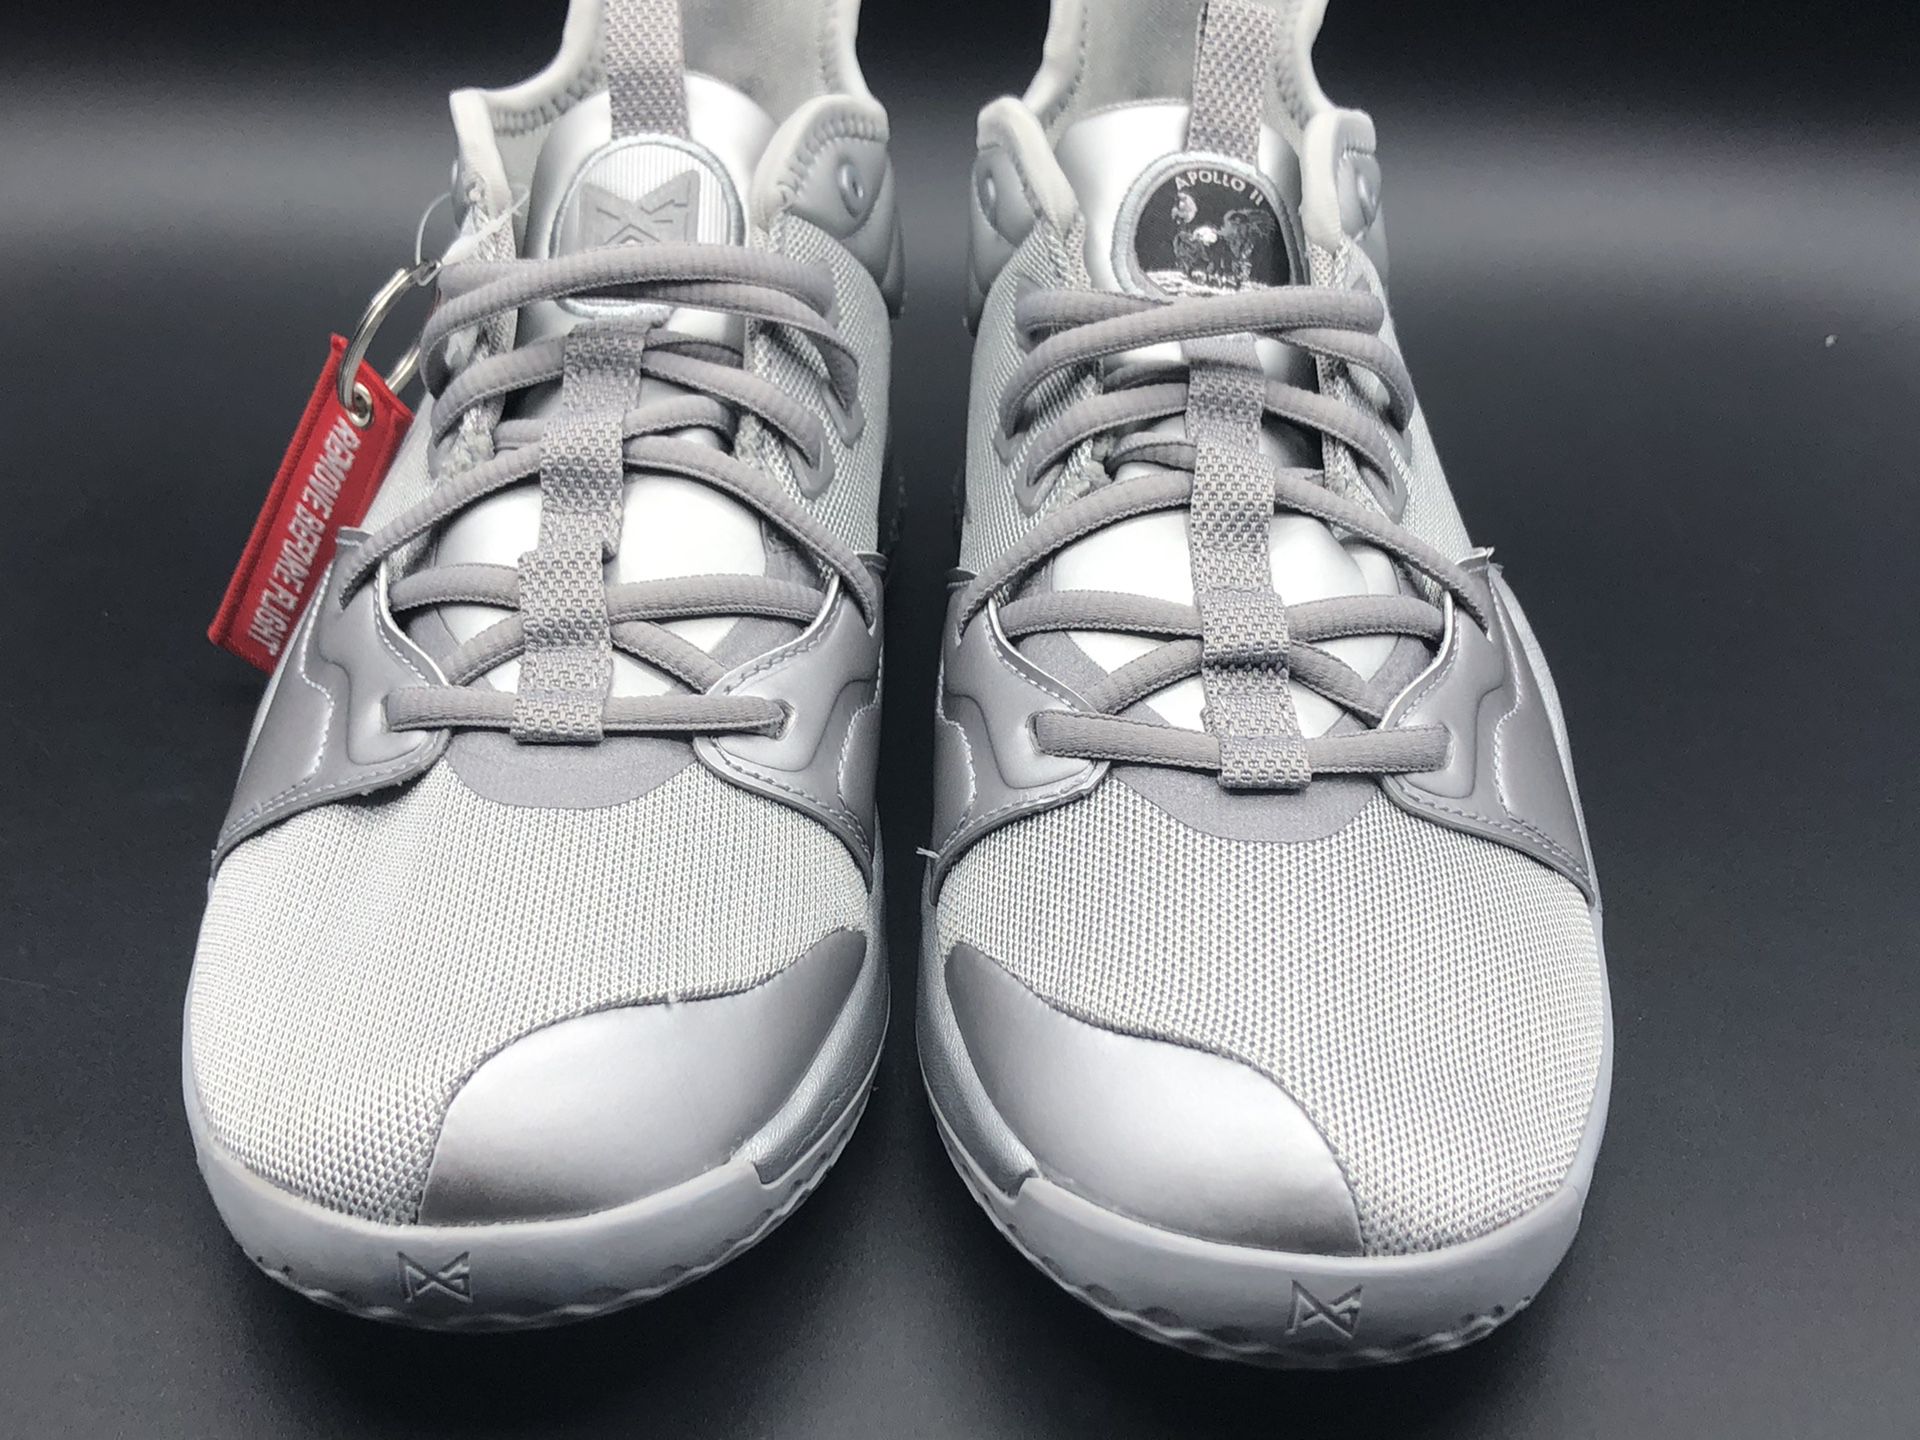 Nike PG 3 "NASA Reflective Silver" Men's Basketball Shoe Sz 7y=8.5womens